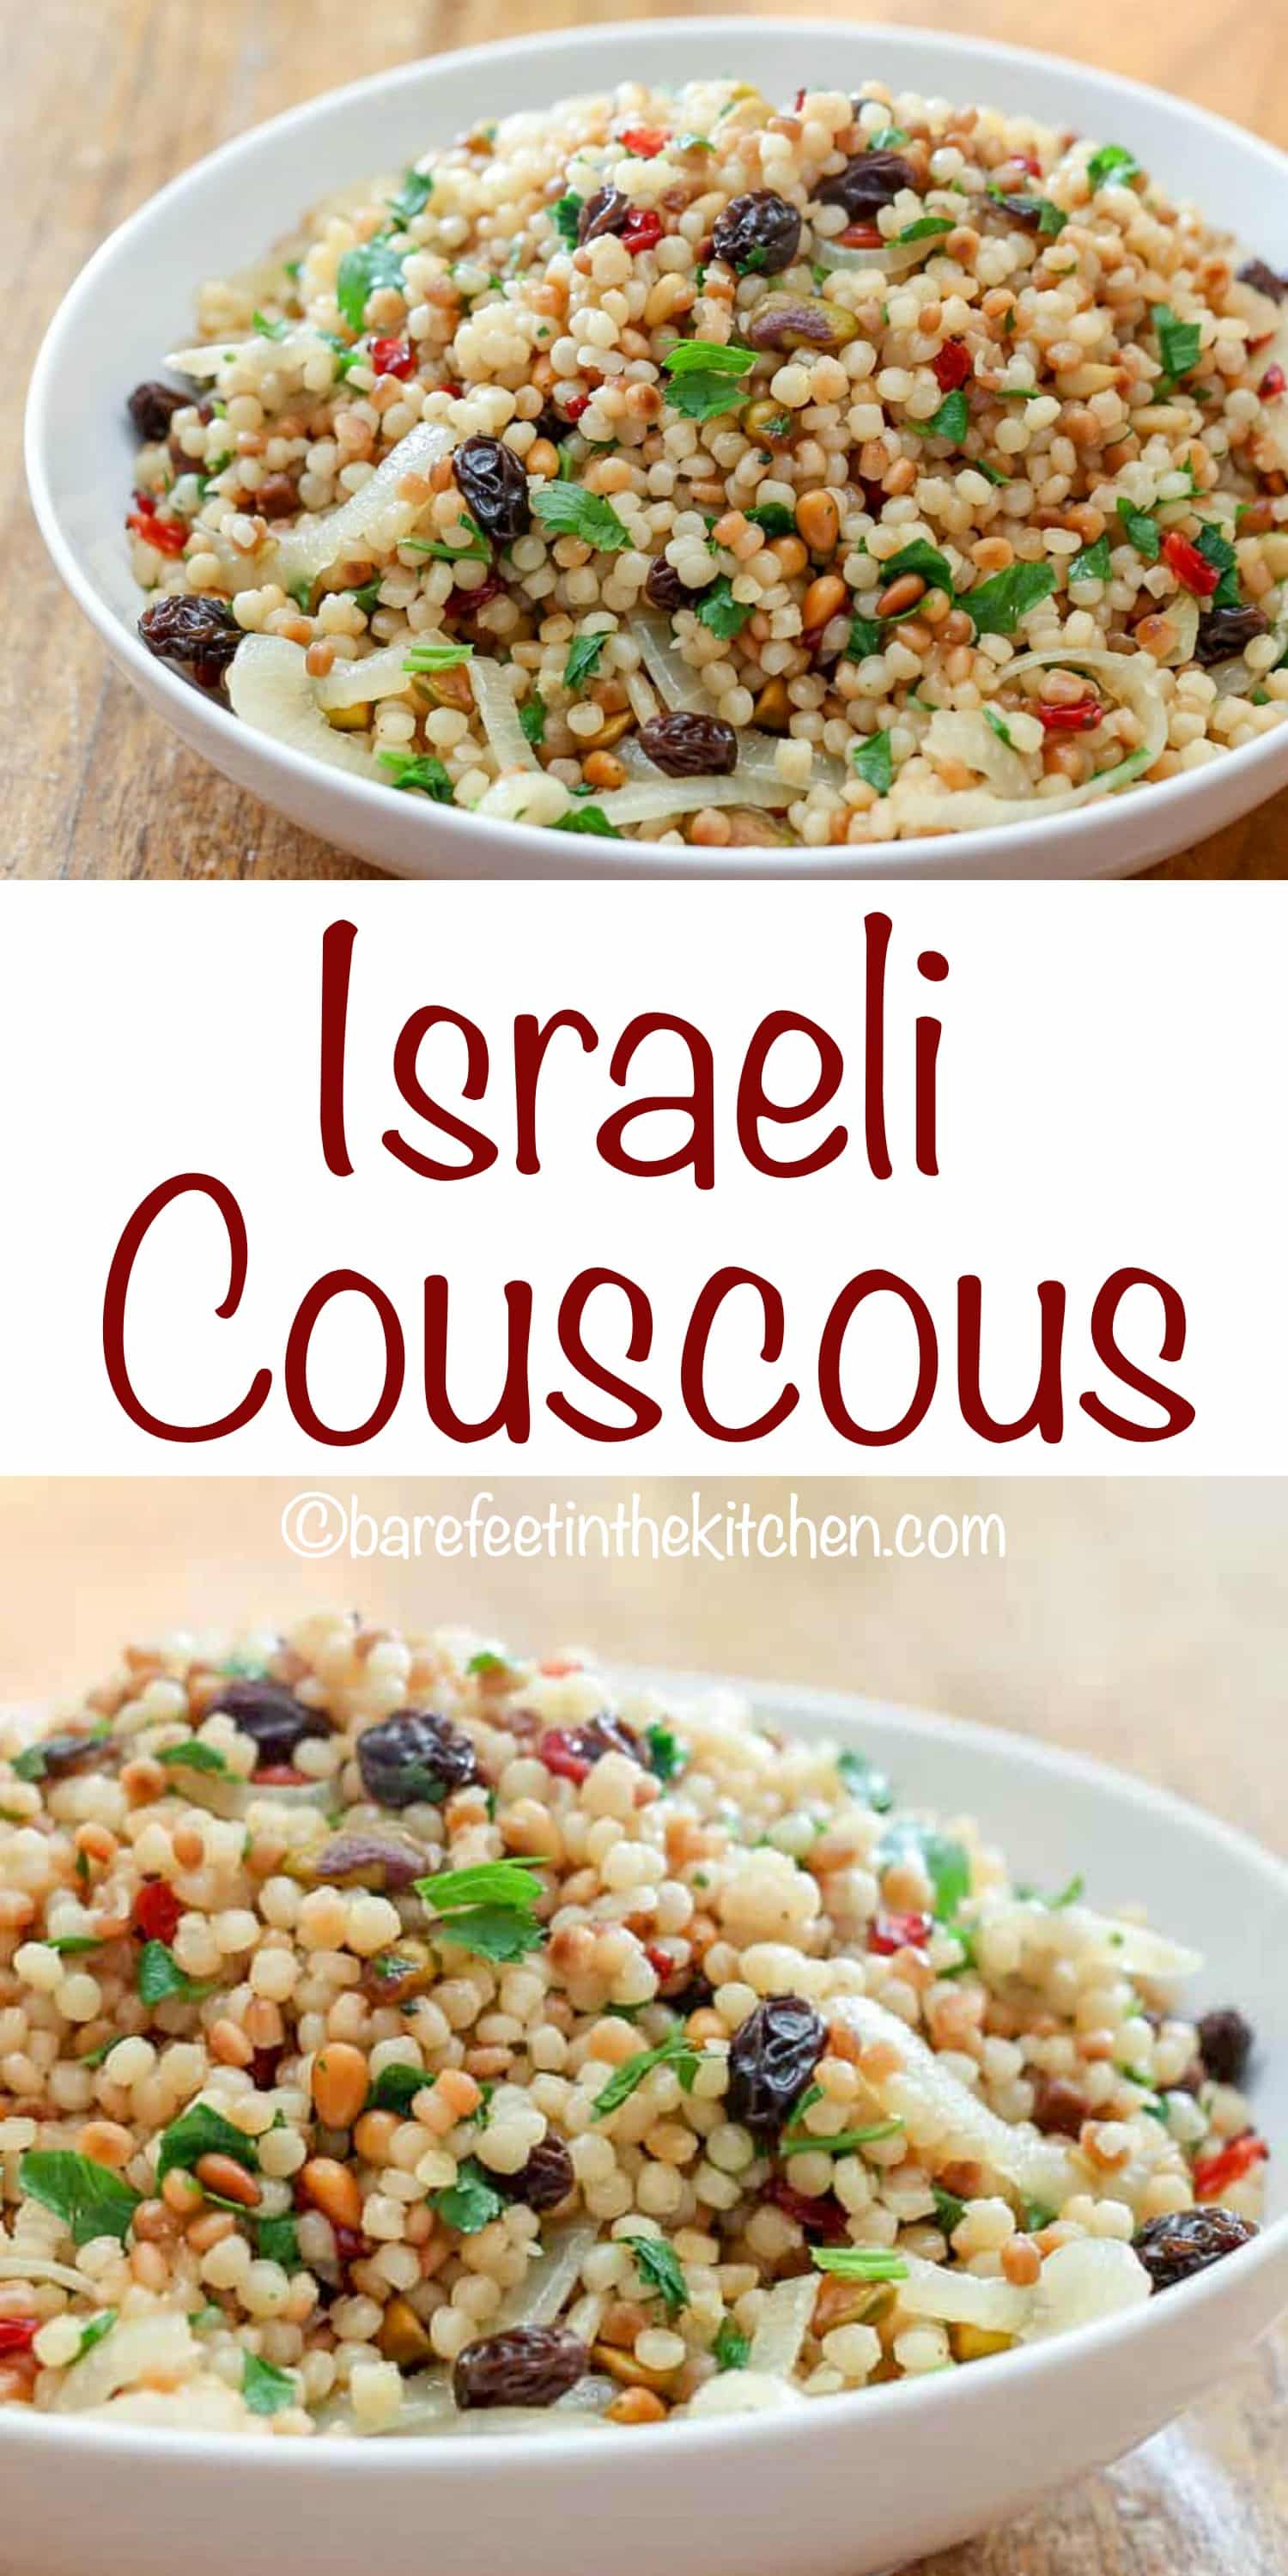 Israeli Couscous - Barefeet in the Kitchen